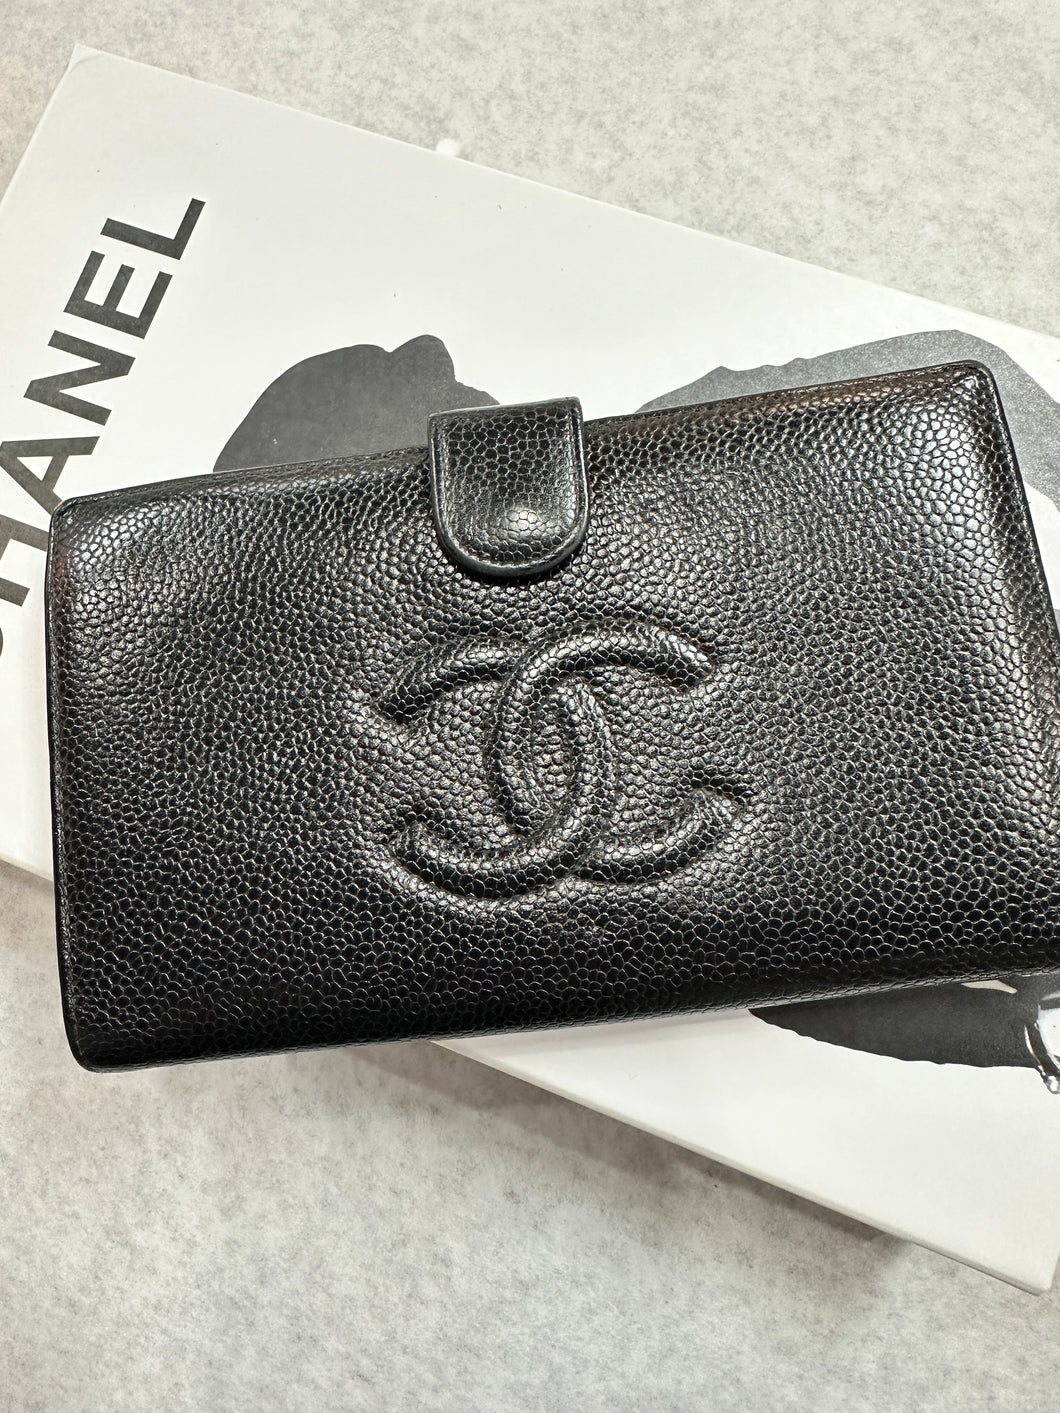 Authentic Chanel Coco Mark CC Caviar Black Wallet